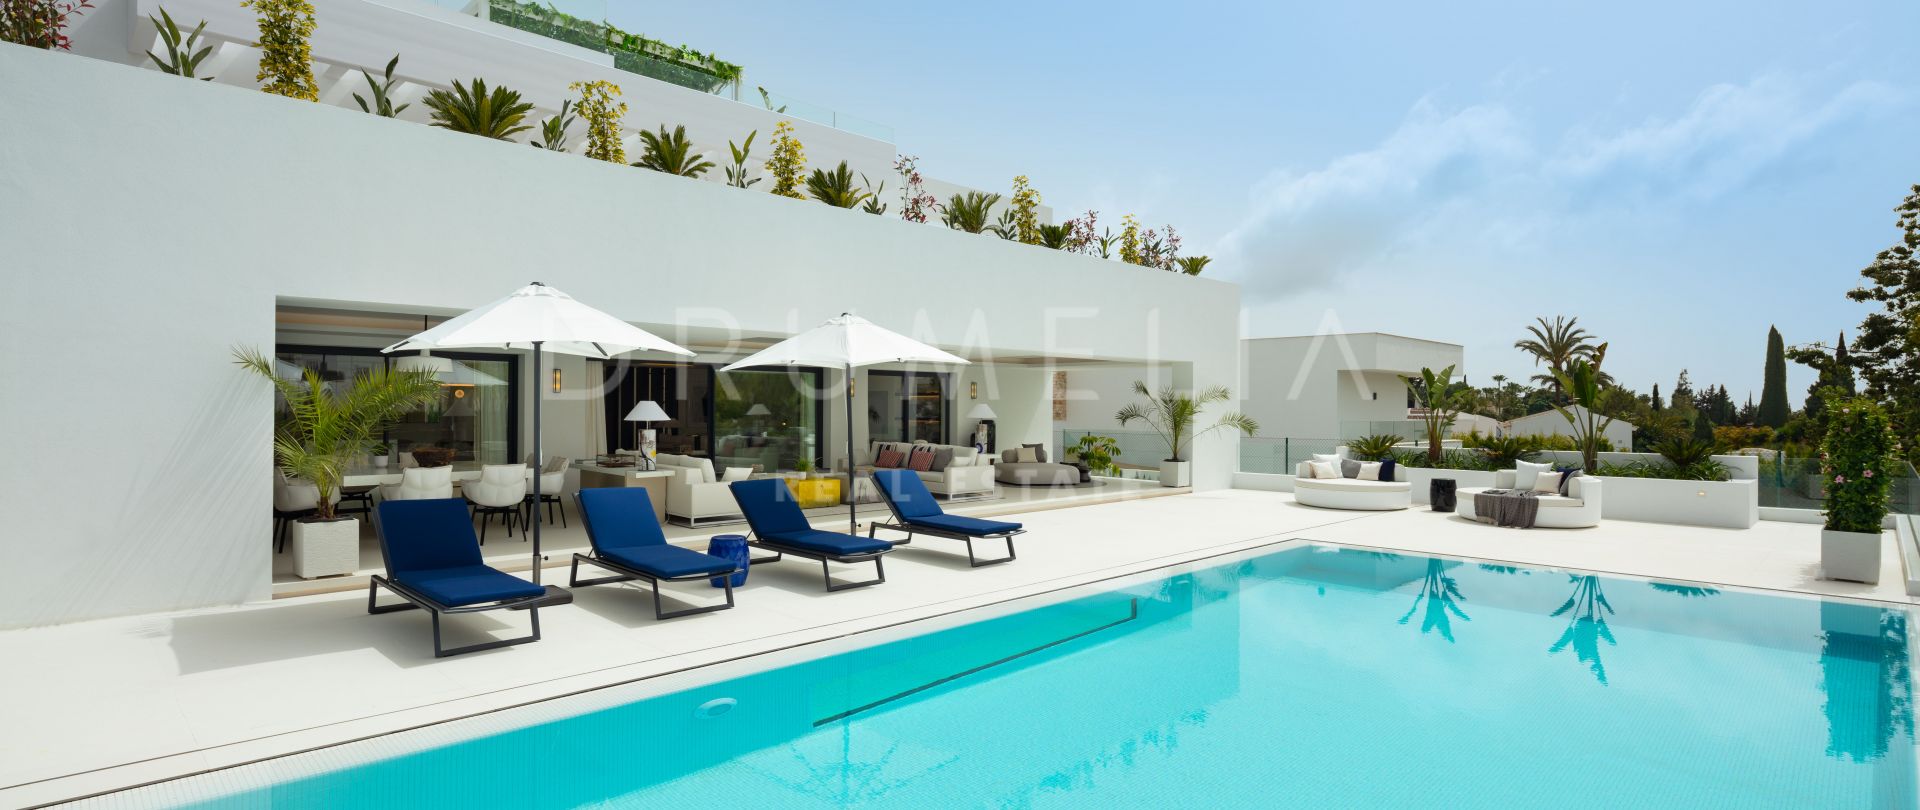 Aloha 151 - Neue moderne, schicke Luxus-Villa mit Designer-Interieur in Nueva Andalucía